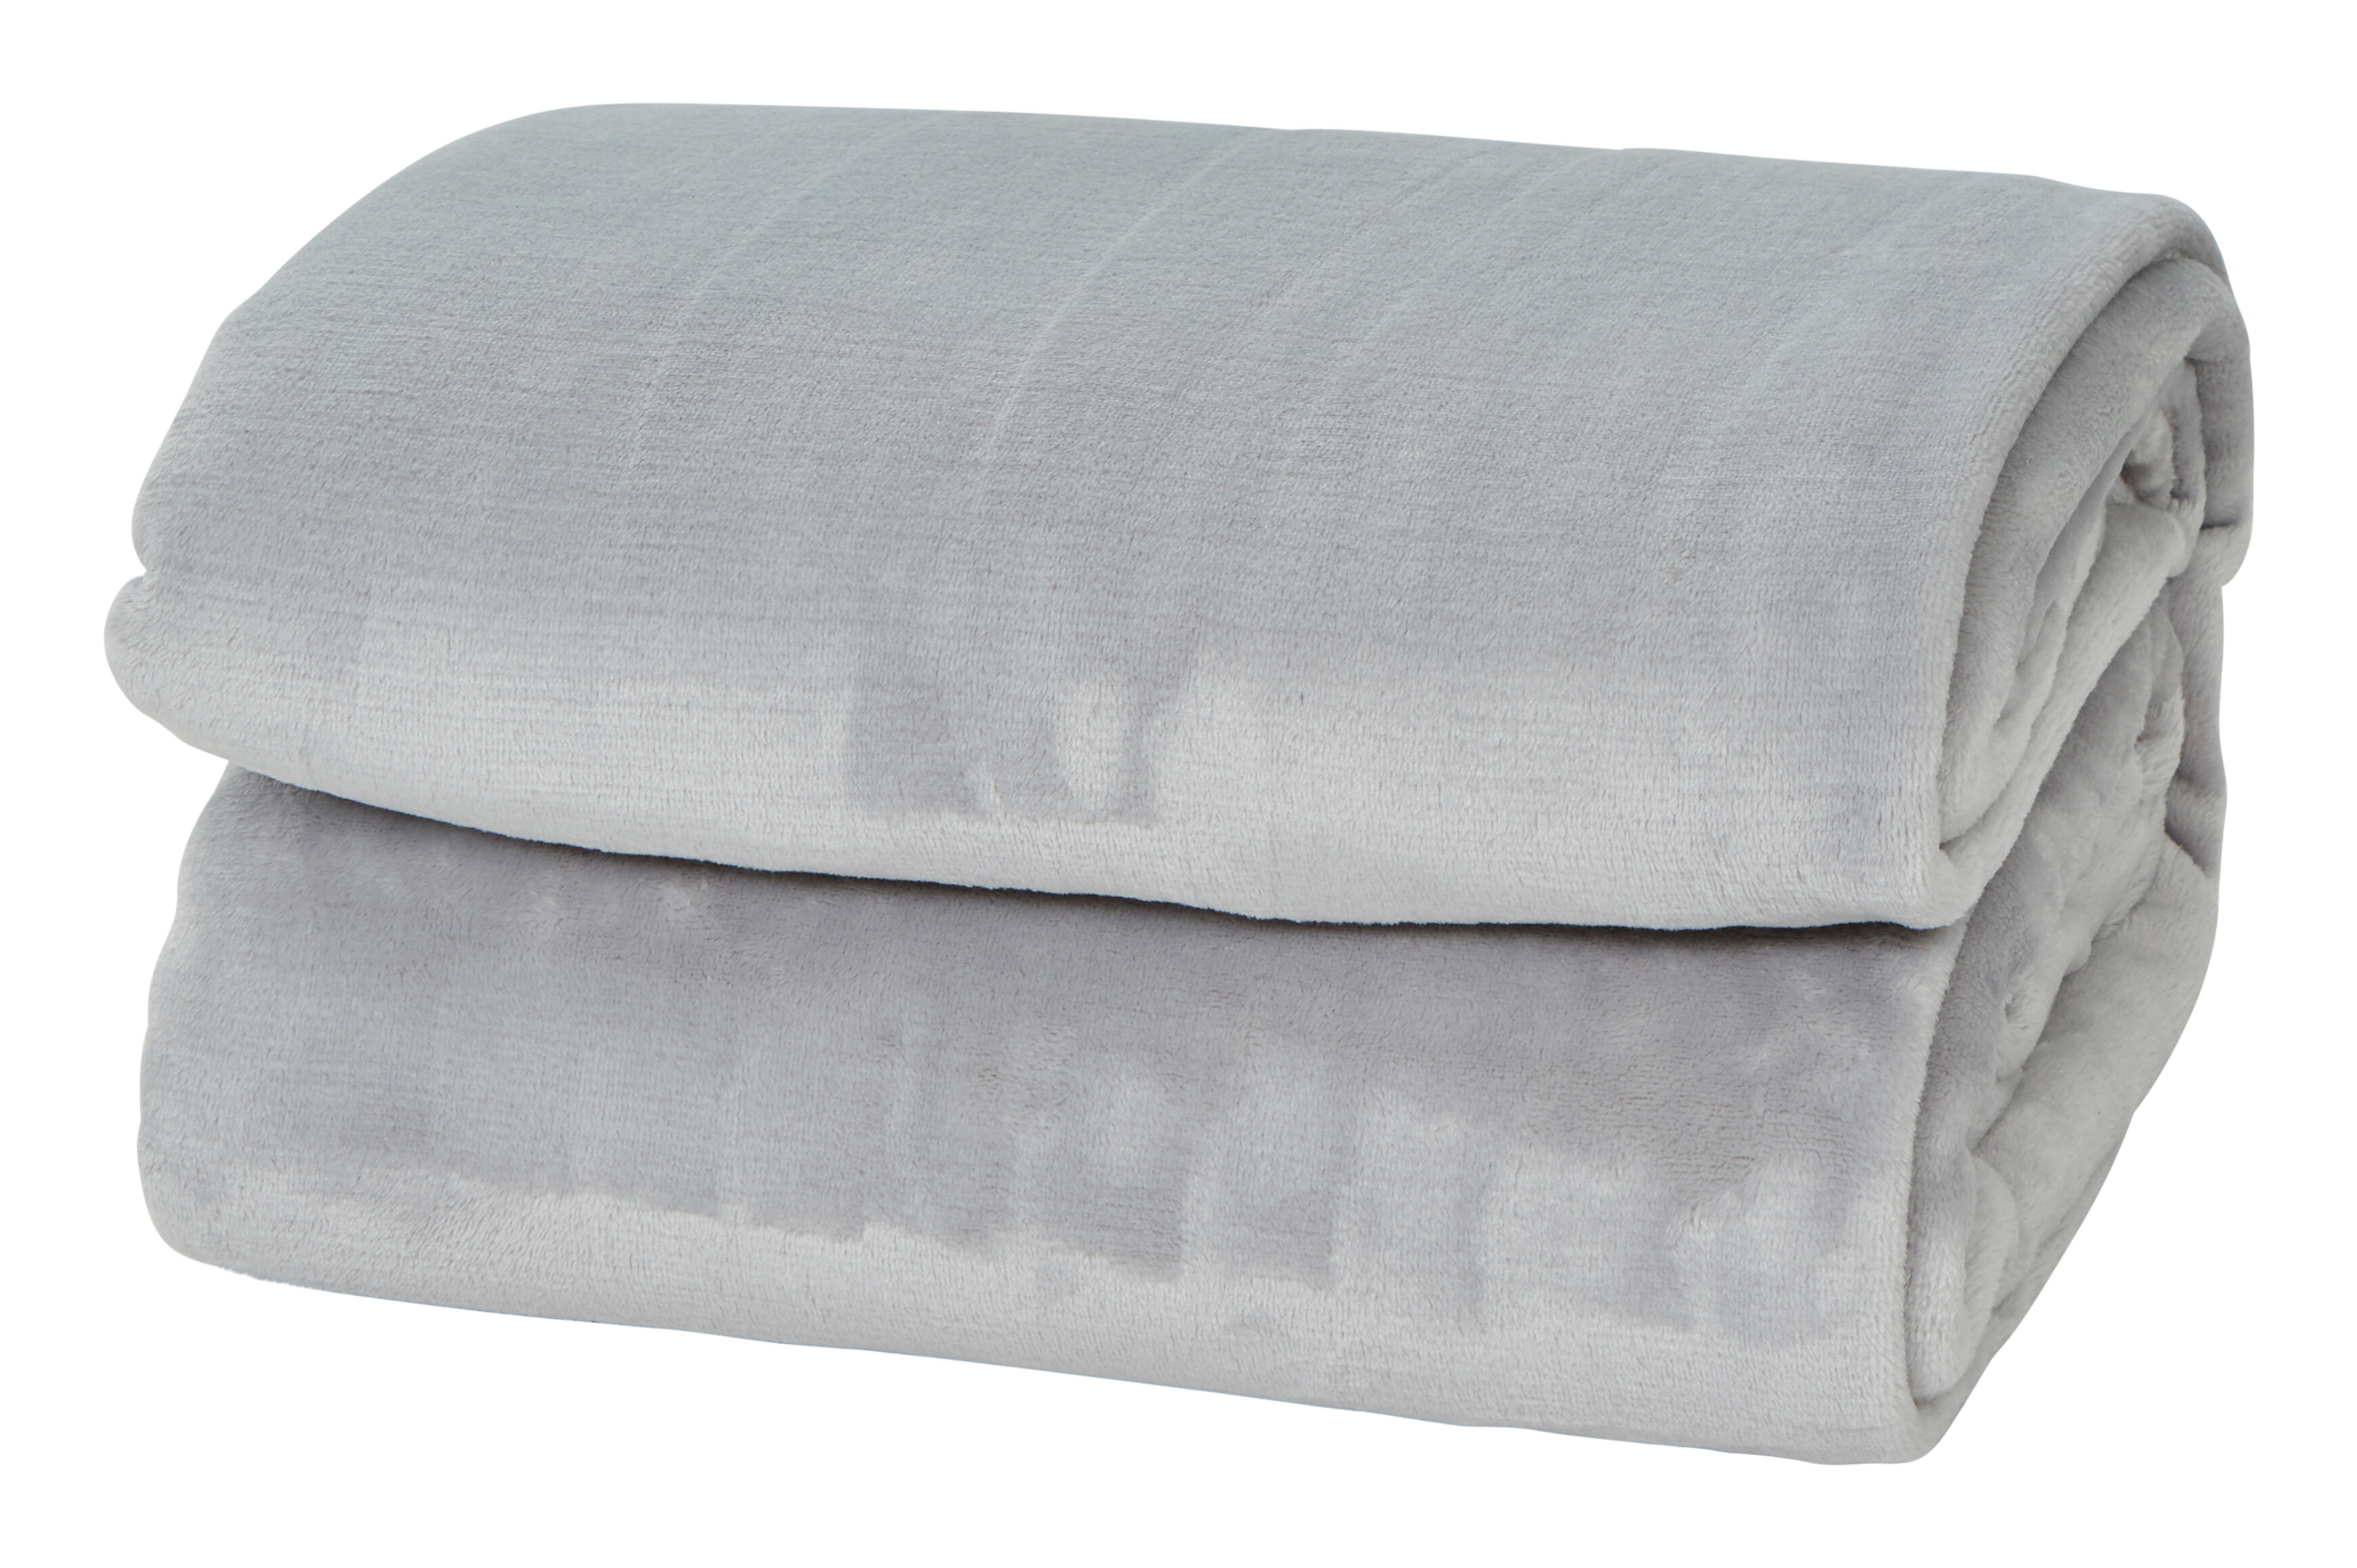 House Of Hampton Johannsen Silky Soft Thick Plush Fleece Blanket Reviews Wayfair